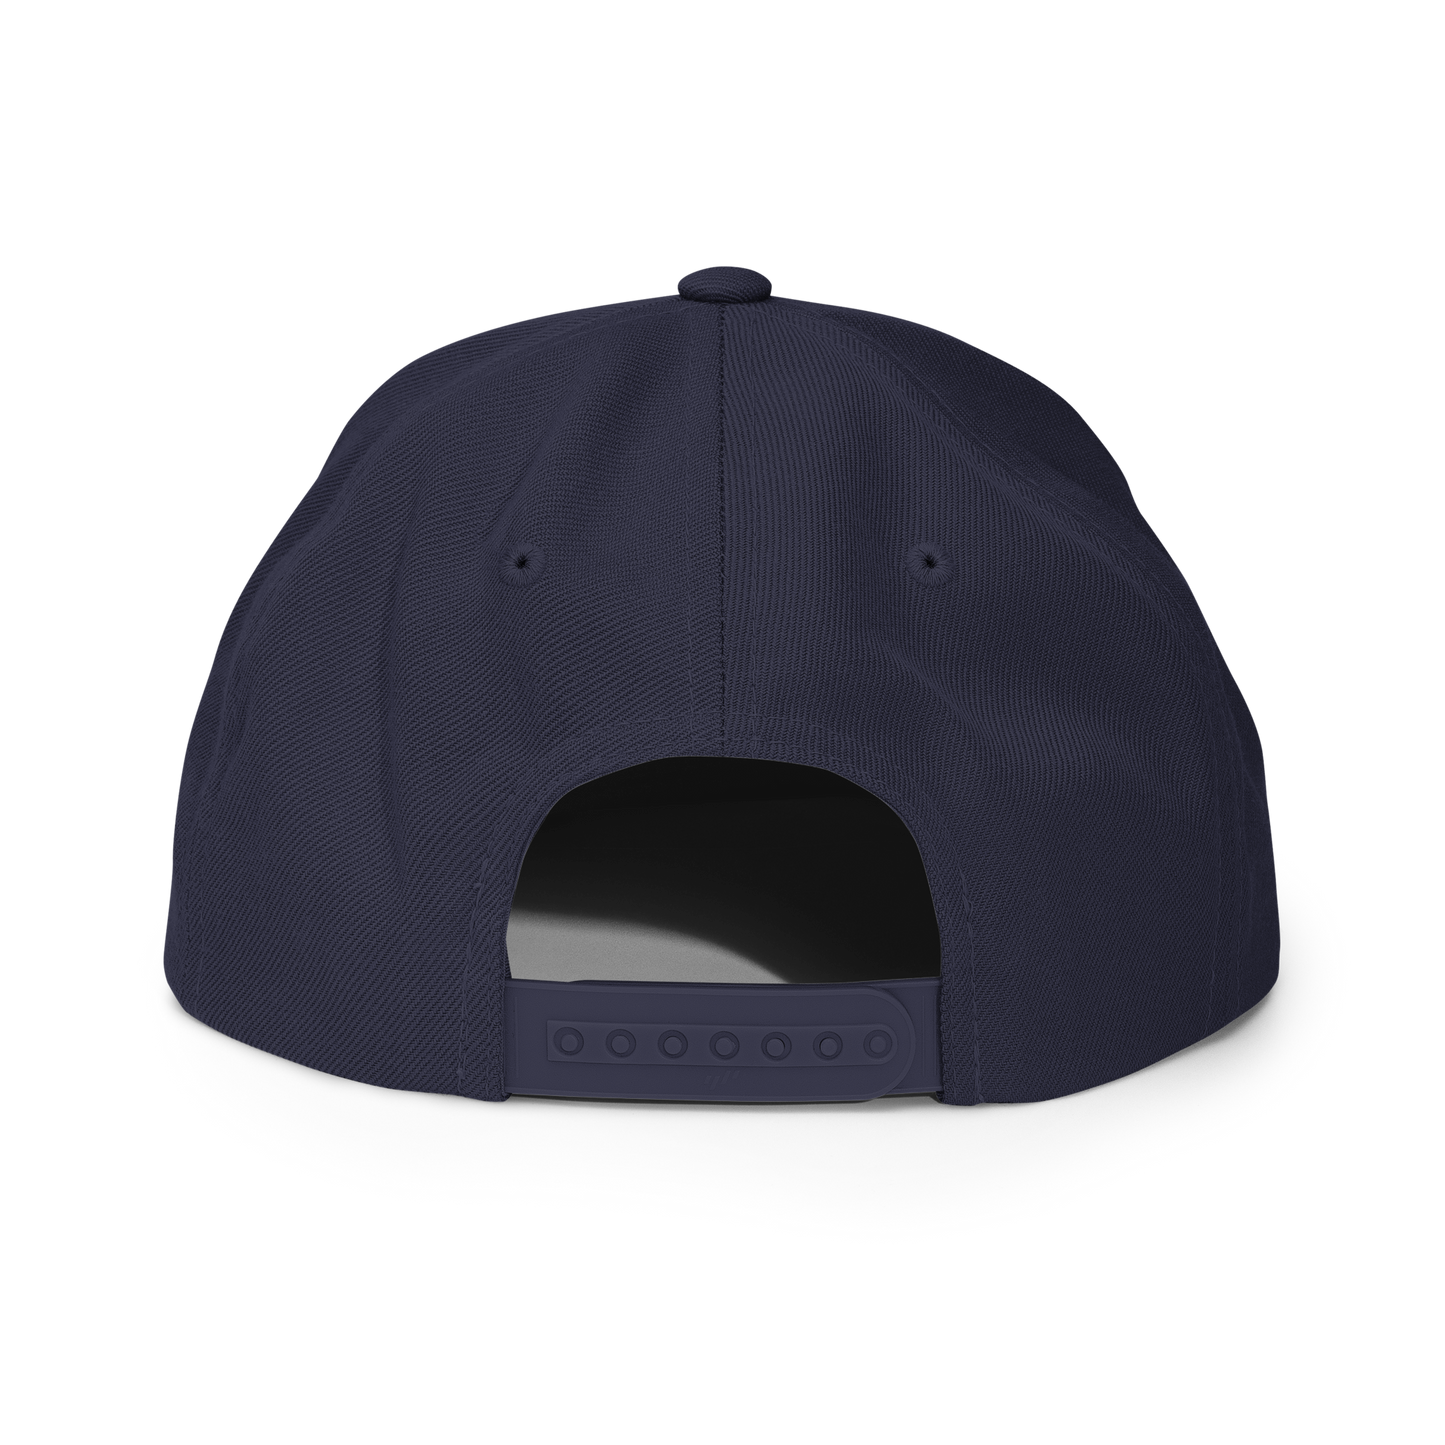 Crossed-X Snapback Hat • Aqua Blue Embroidery